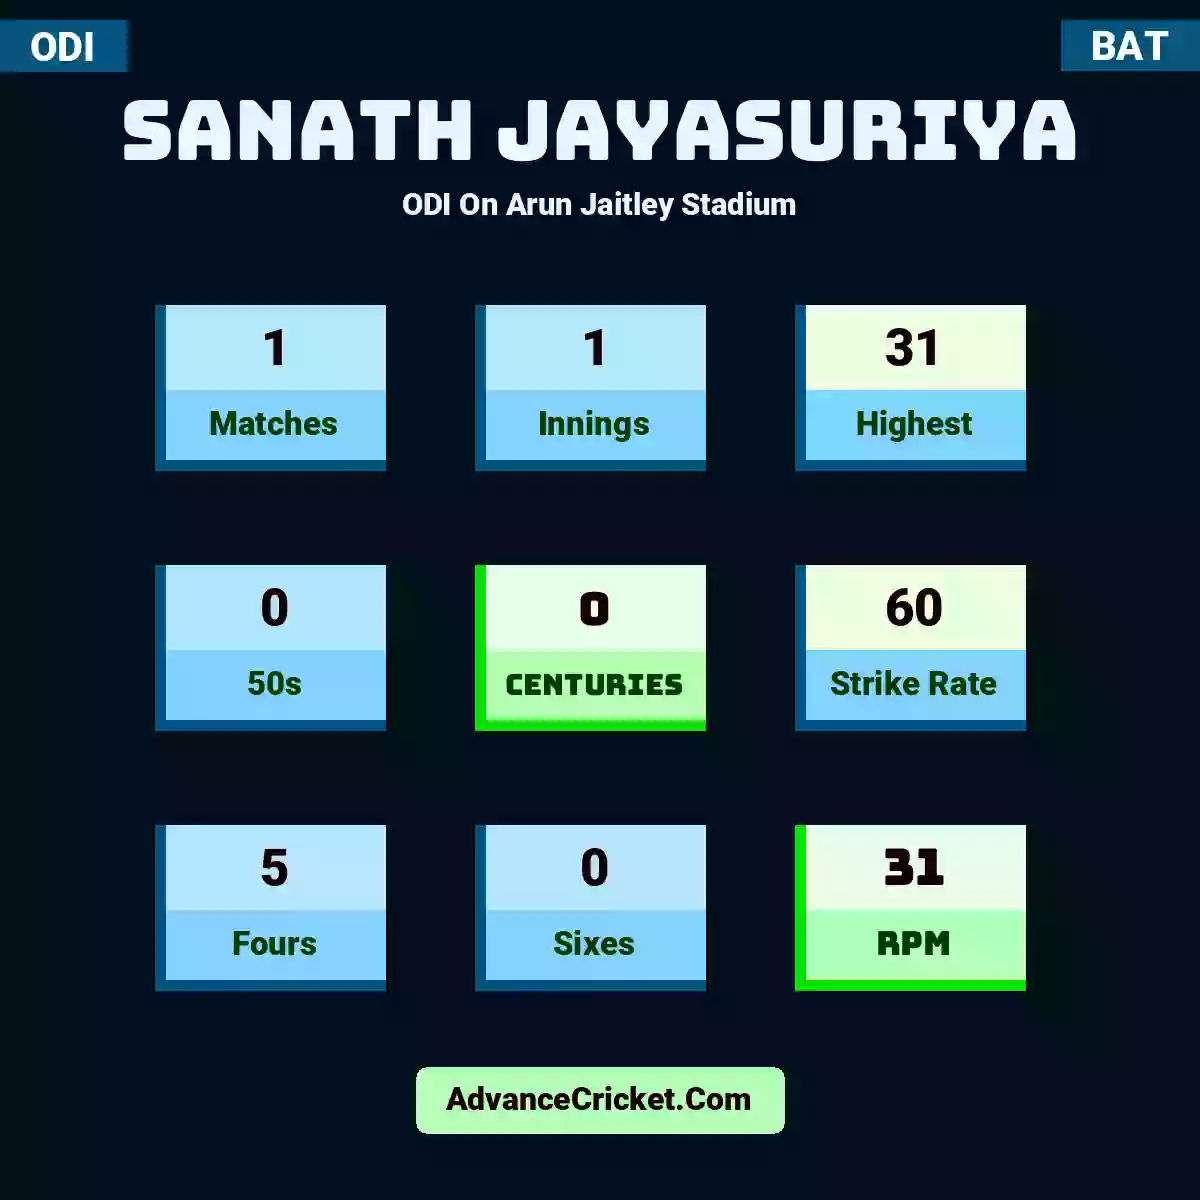 Sanath Jayasuriya ODI  On Arun Jaitley Stadium, Sanath Jayasuriya played 1 matches, scored 31 runs as highest, 0 half-centuries, and 0 centuries, with a strike rate of 60. S.Jayasuriya hit 5 fours and 0 sixes, with an RPM of 31.